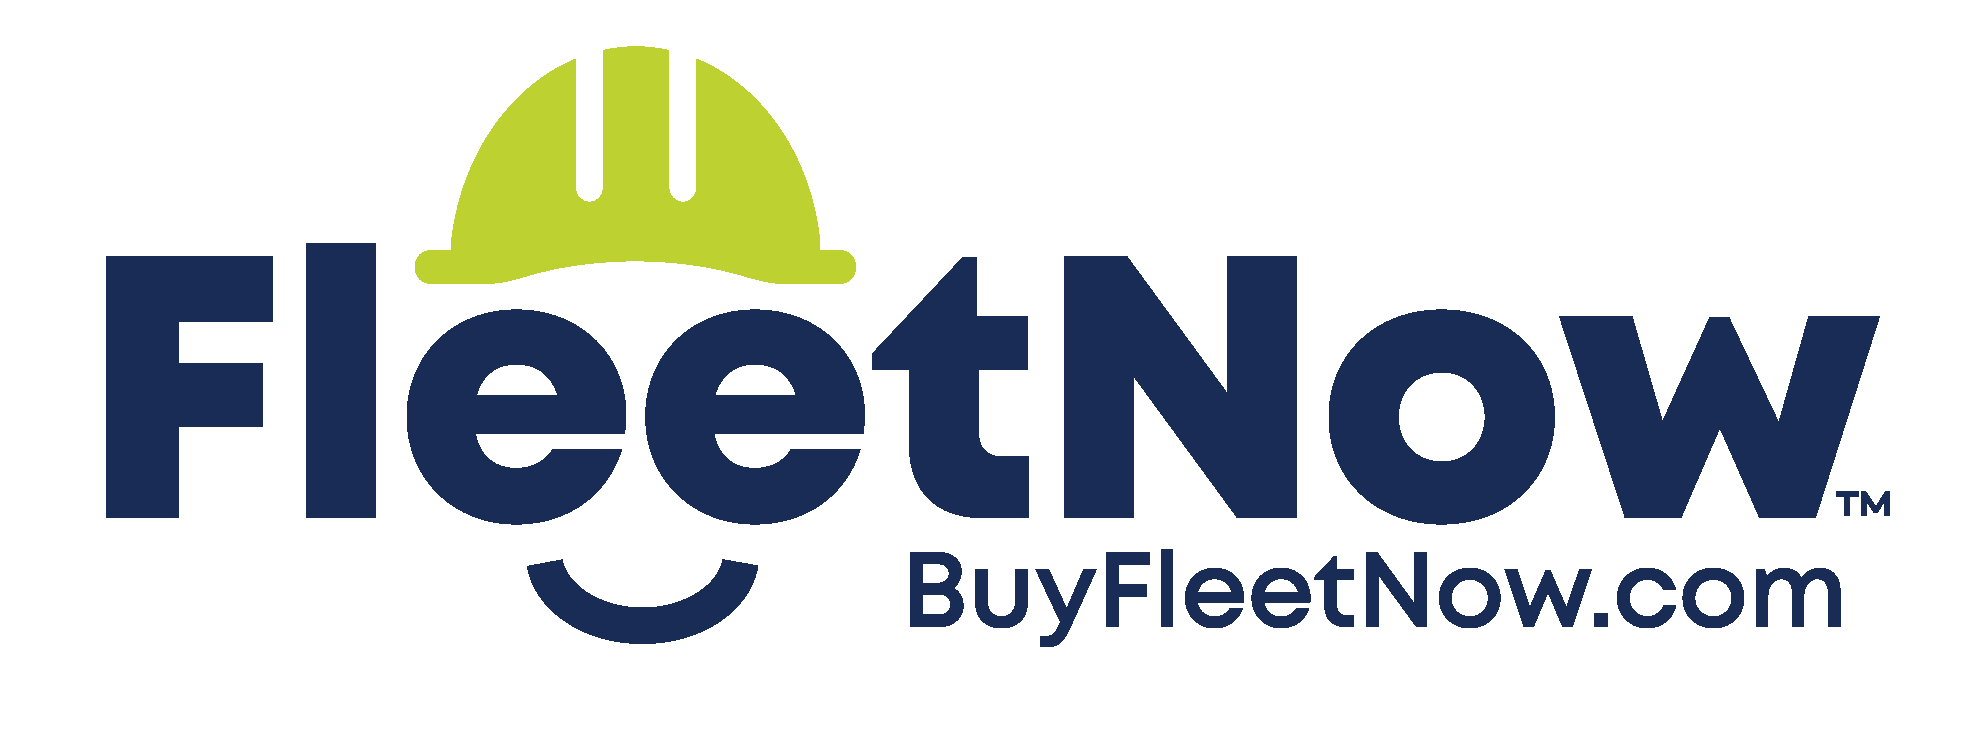 BuyFleetNow.com